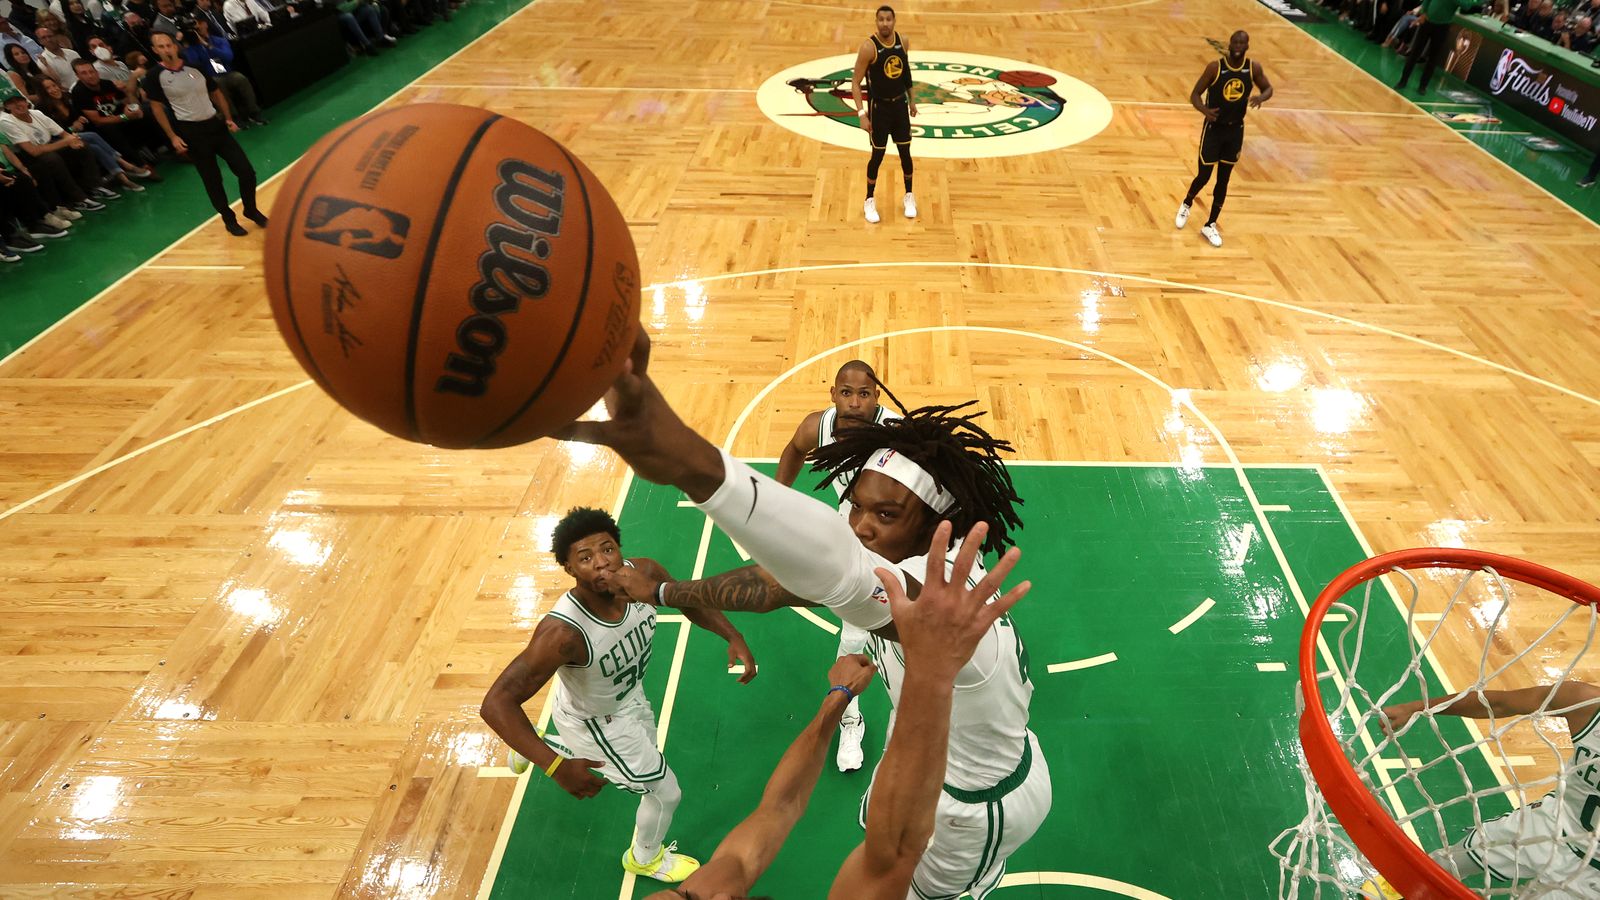 VIDEO: Robert Williams breaks the rim, causes delay in Celtics vs